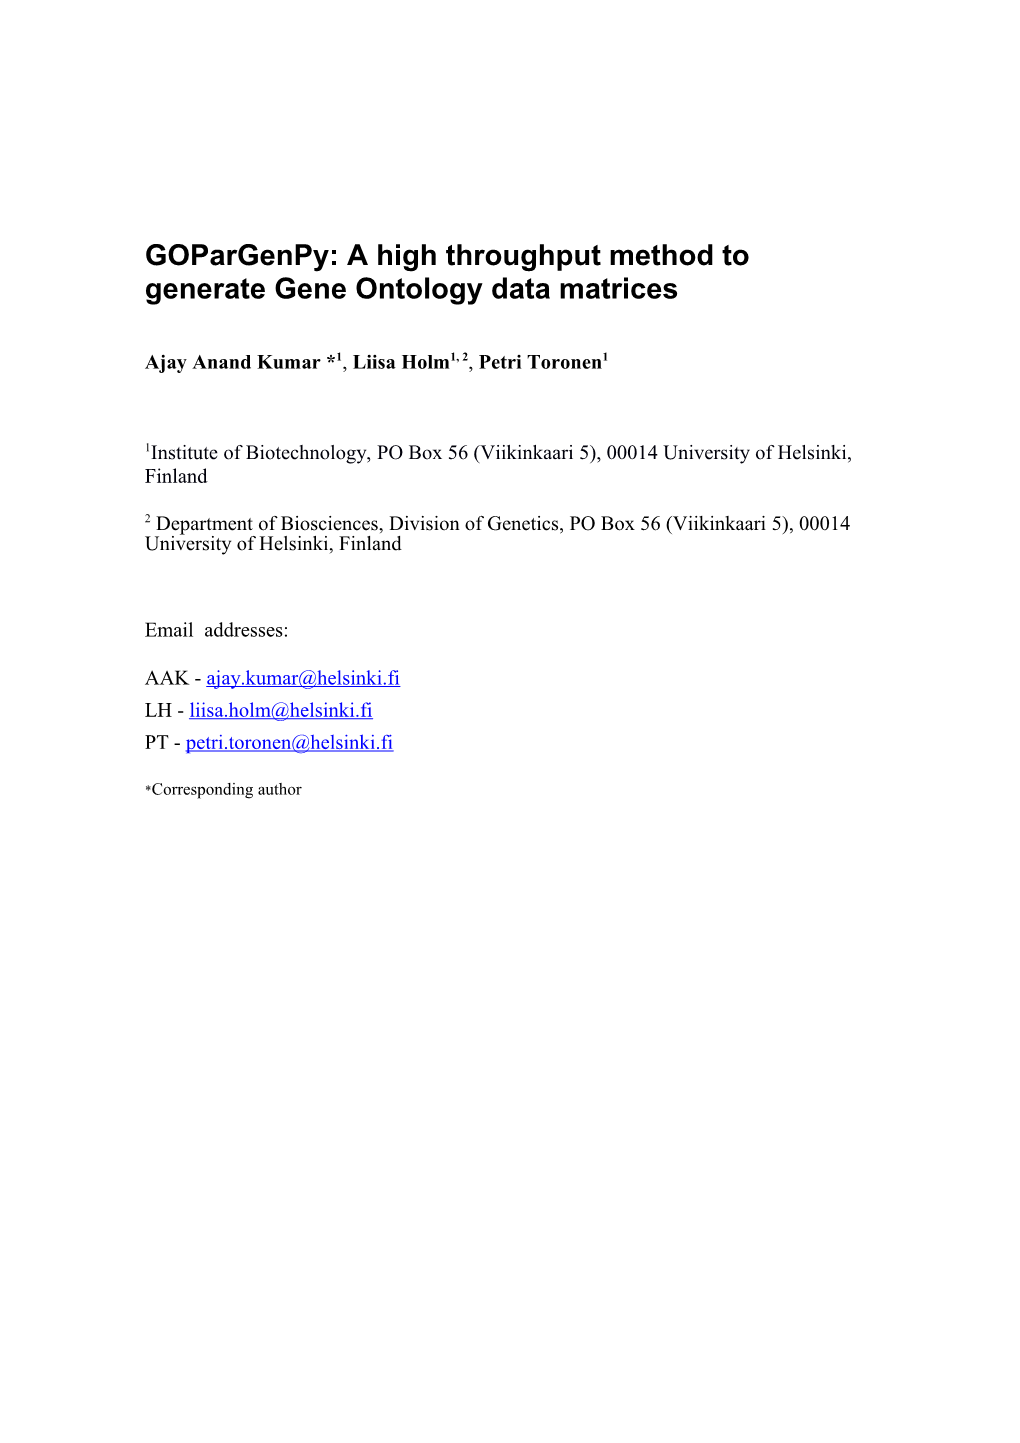 Gopargenpy: a High Throughput Method to Generate Gene Ontology Data Matrices